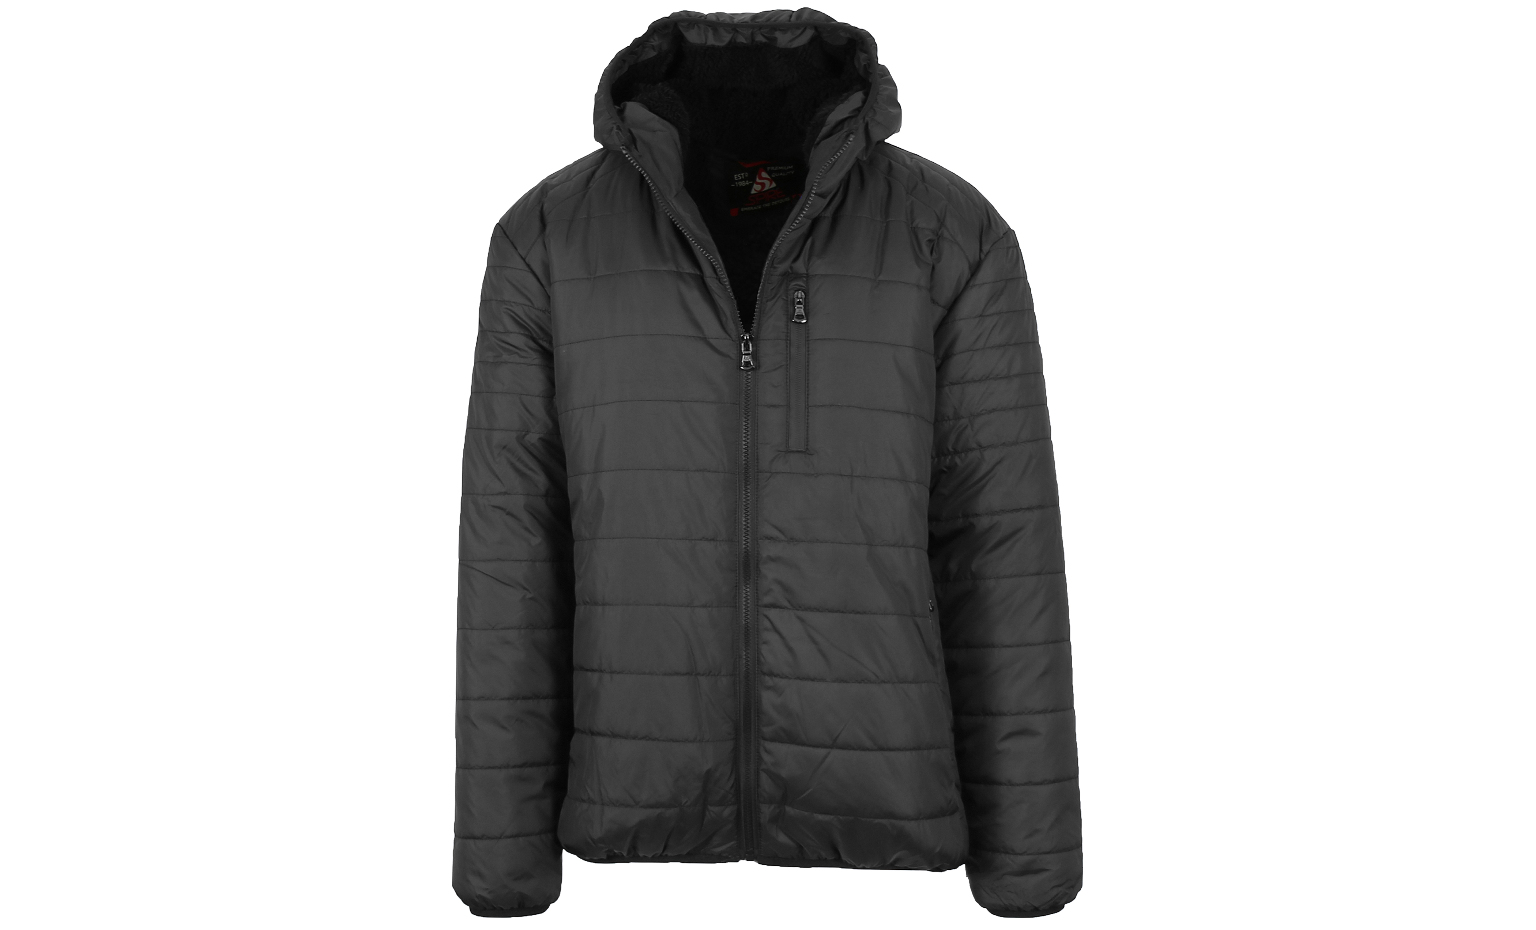 Wholesale Men's Sherpa Lined Puffer Jackets - S-2X, Black - DollarDays